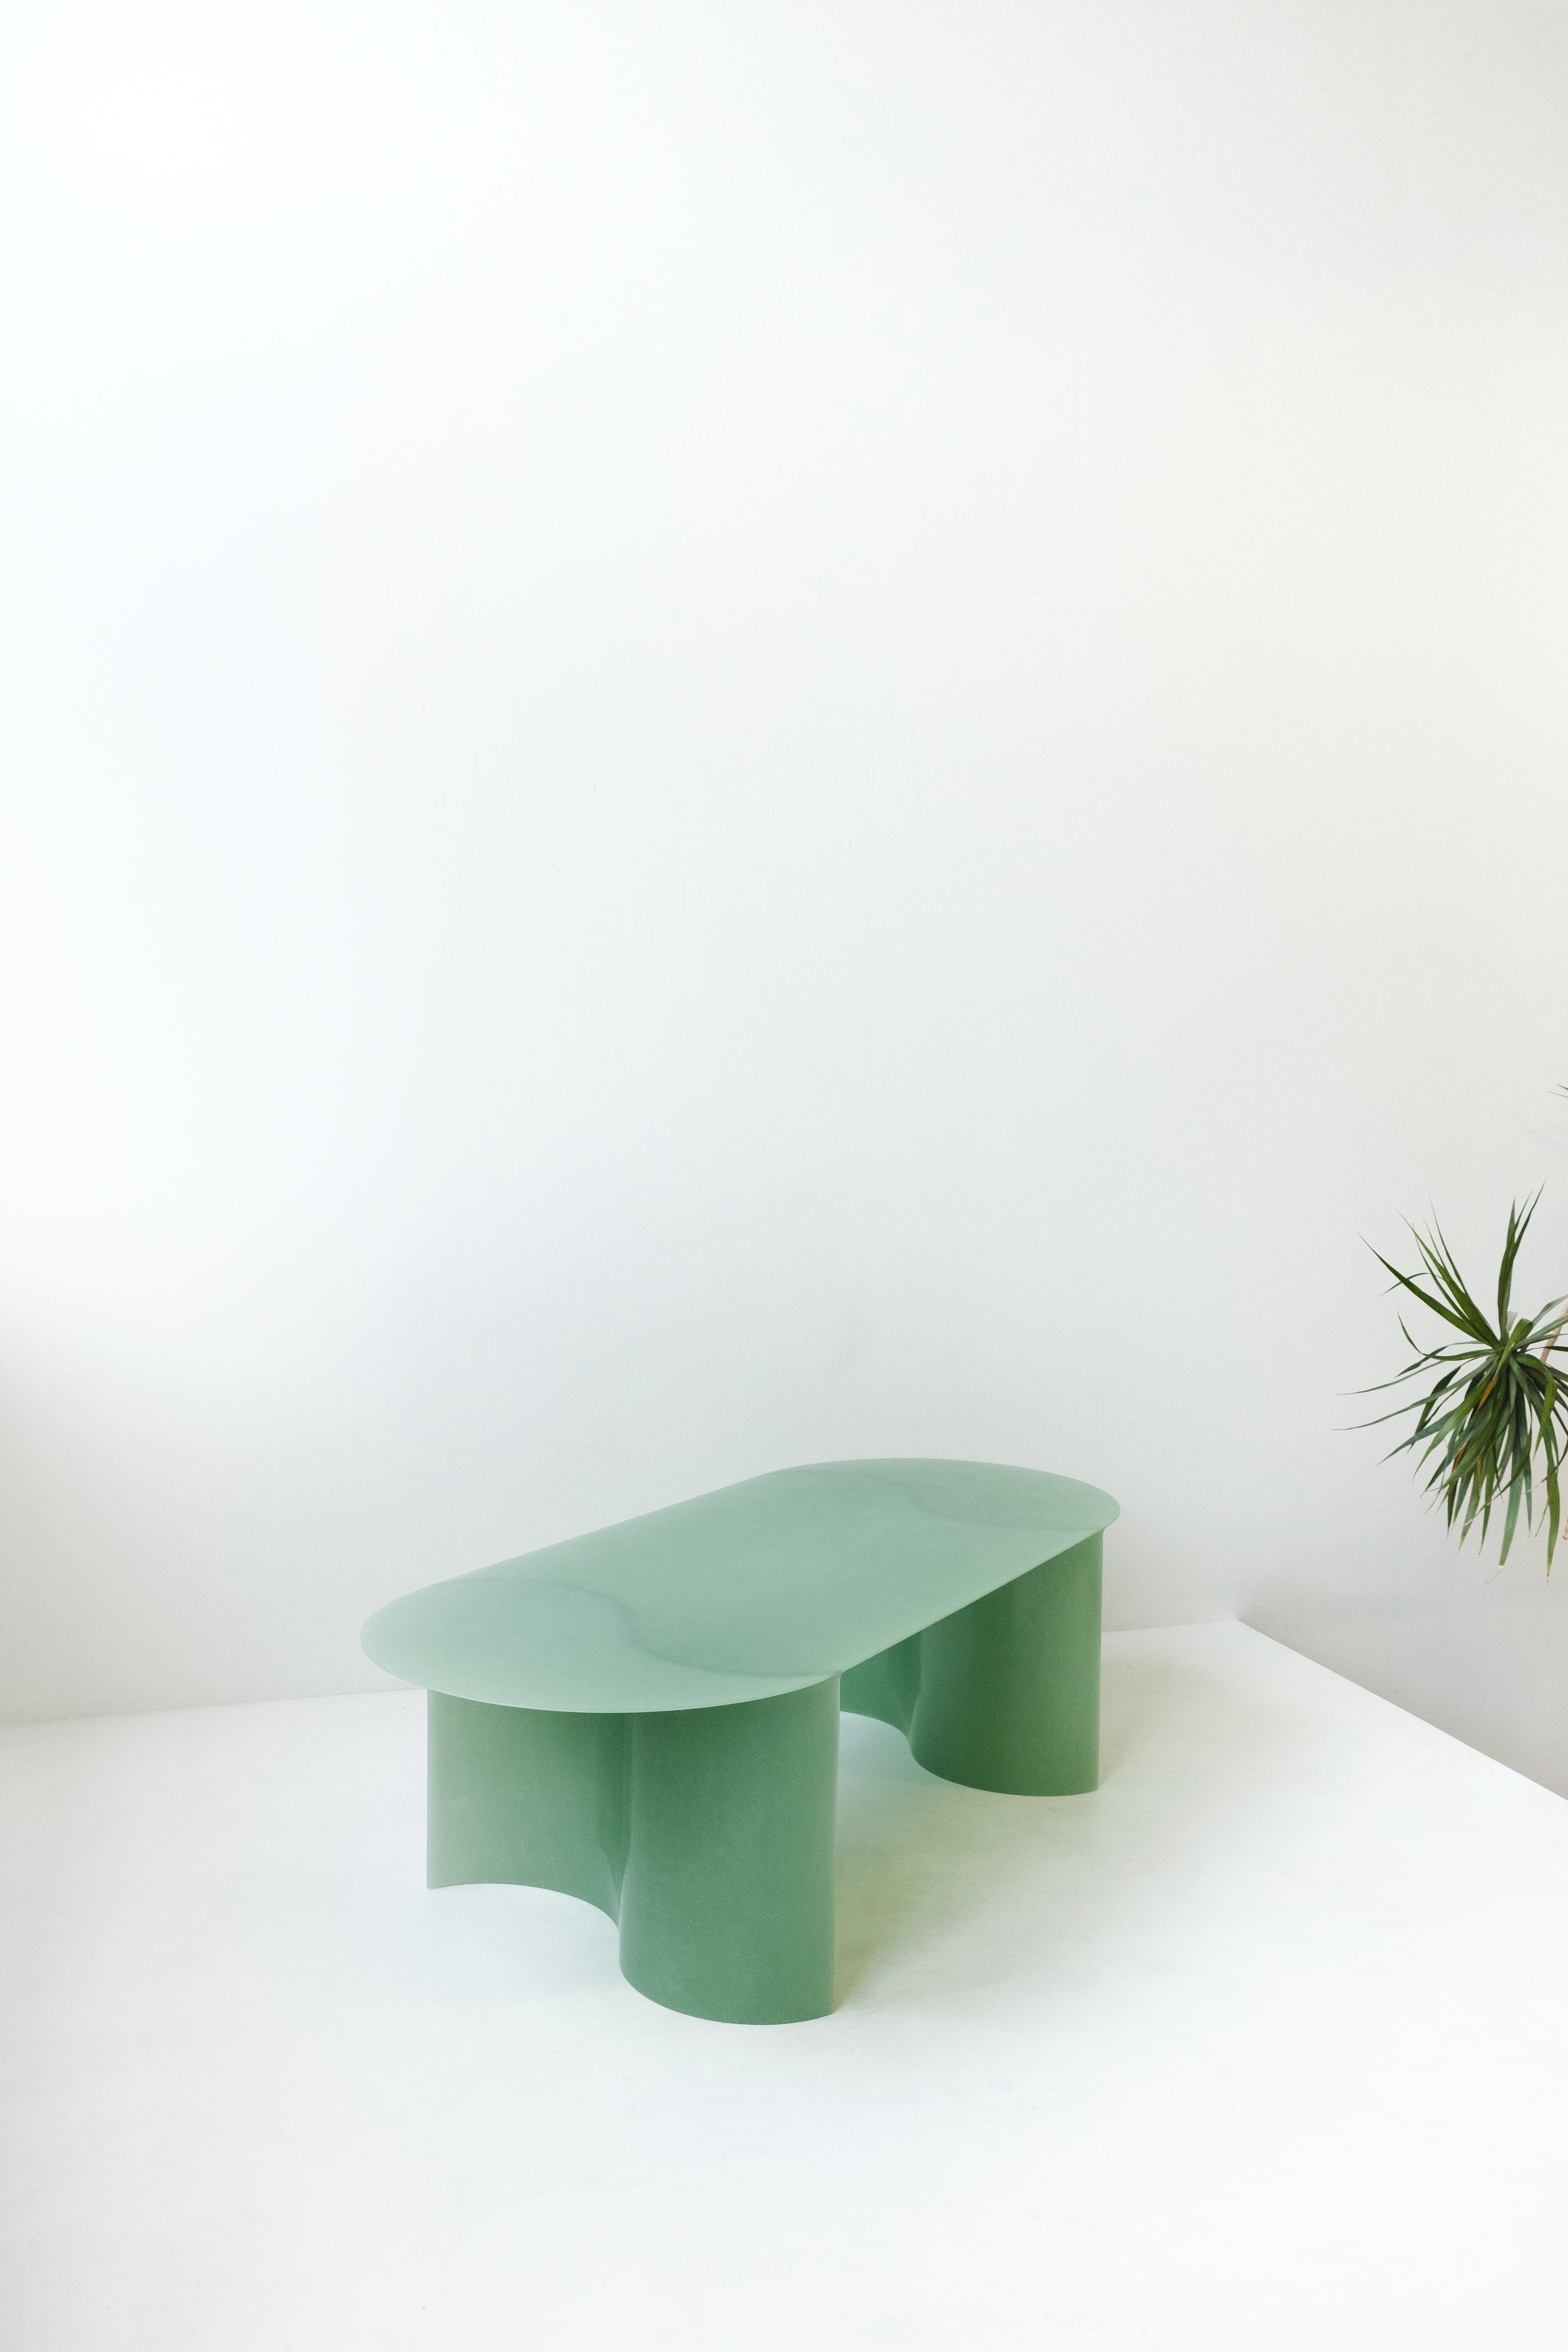 Dutch Contemporary Green Fiberglass, New Wave Coffee Table Big, by Lukas Cober